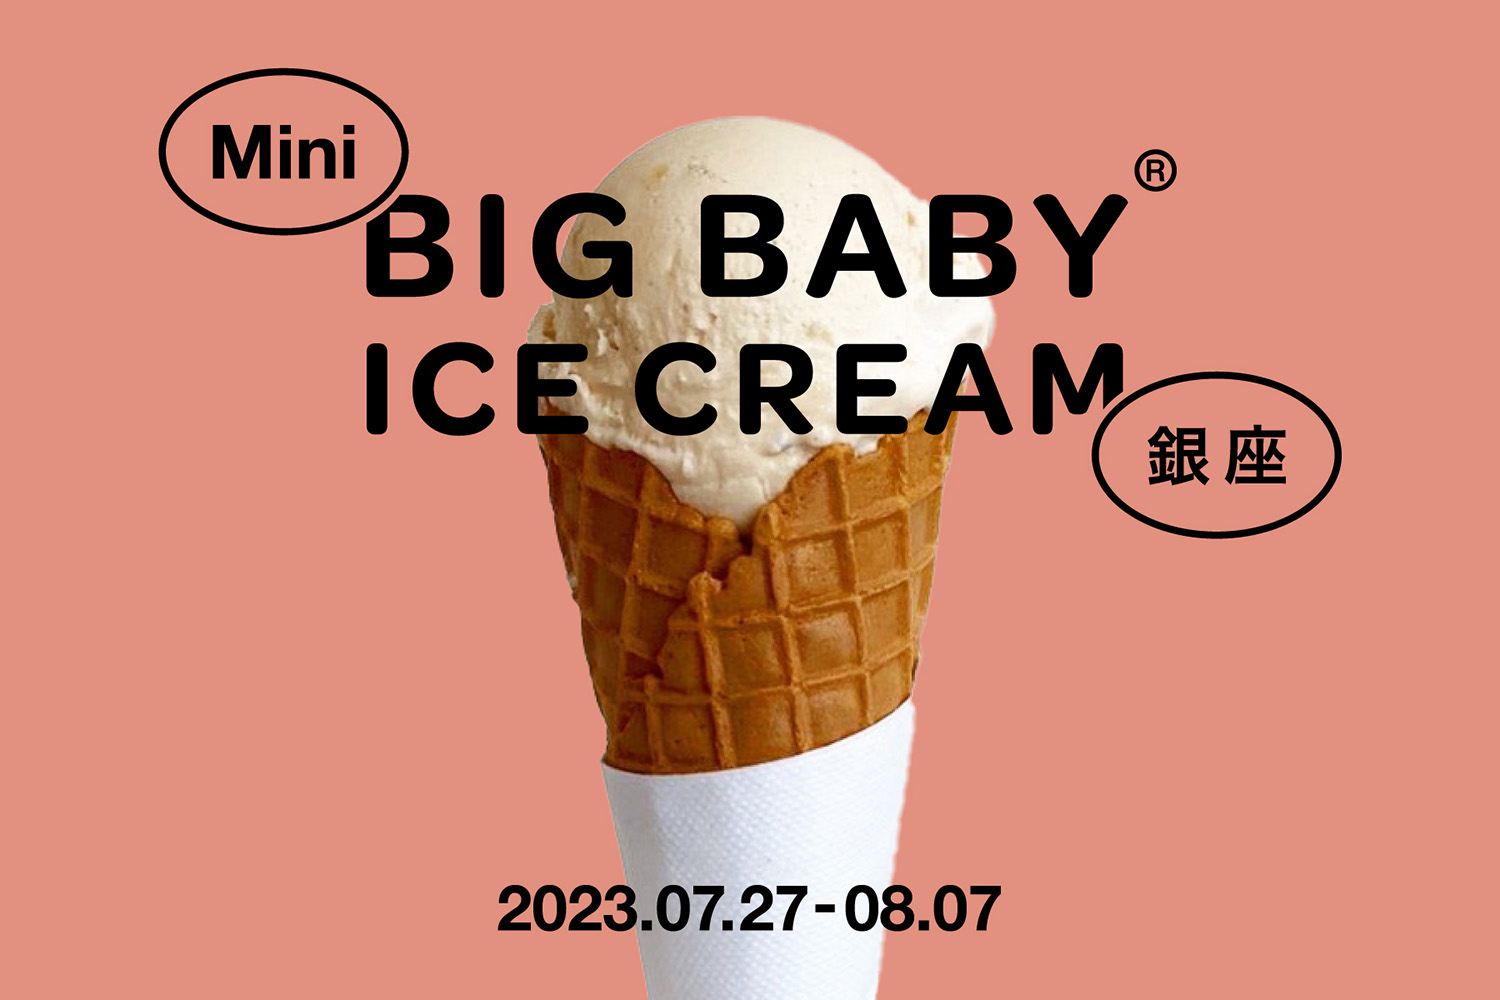 Mini BIG BABY ICE CREAM 銀座 告知ビジュアル